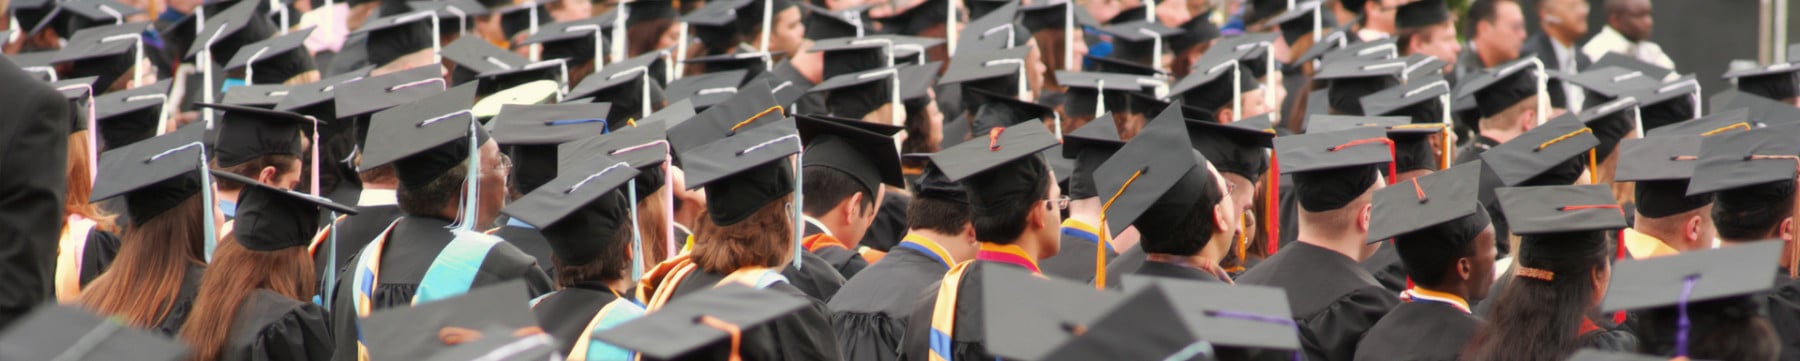 20-million-missing-graduates